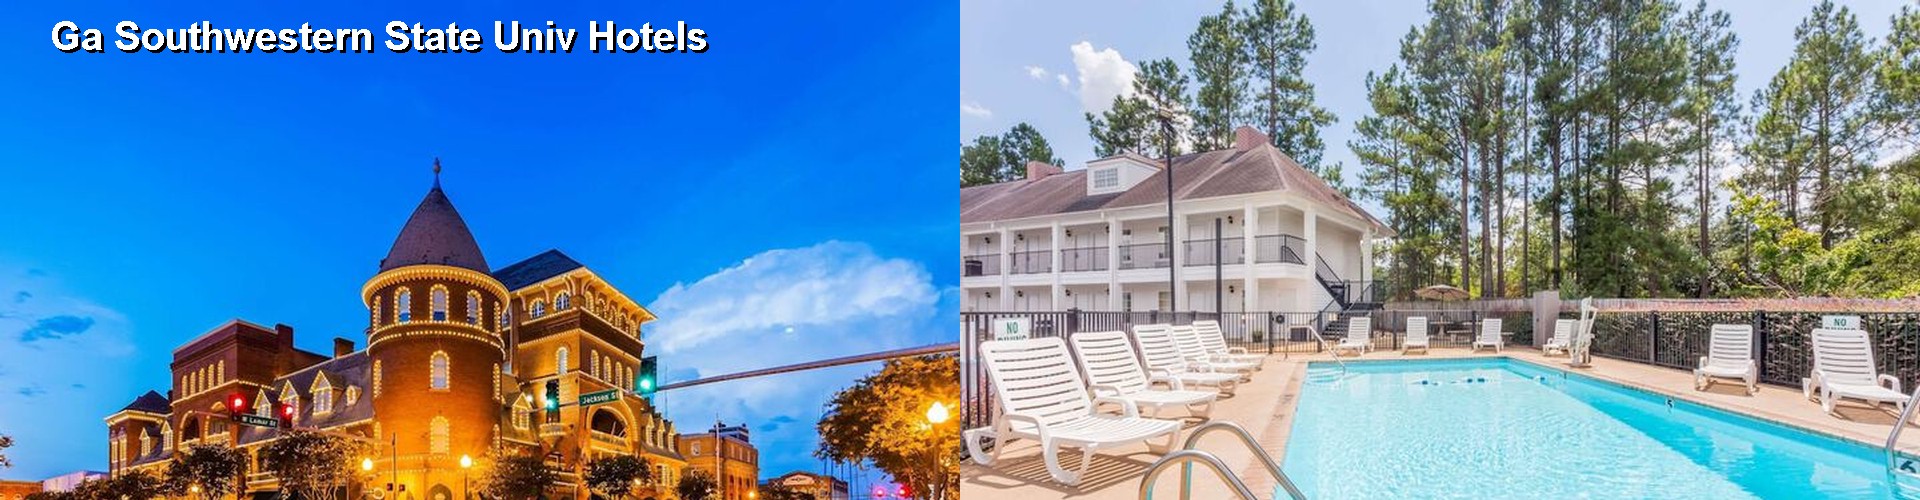 3 Best Hotels near Ga Southwestern State Univ